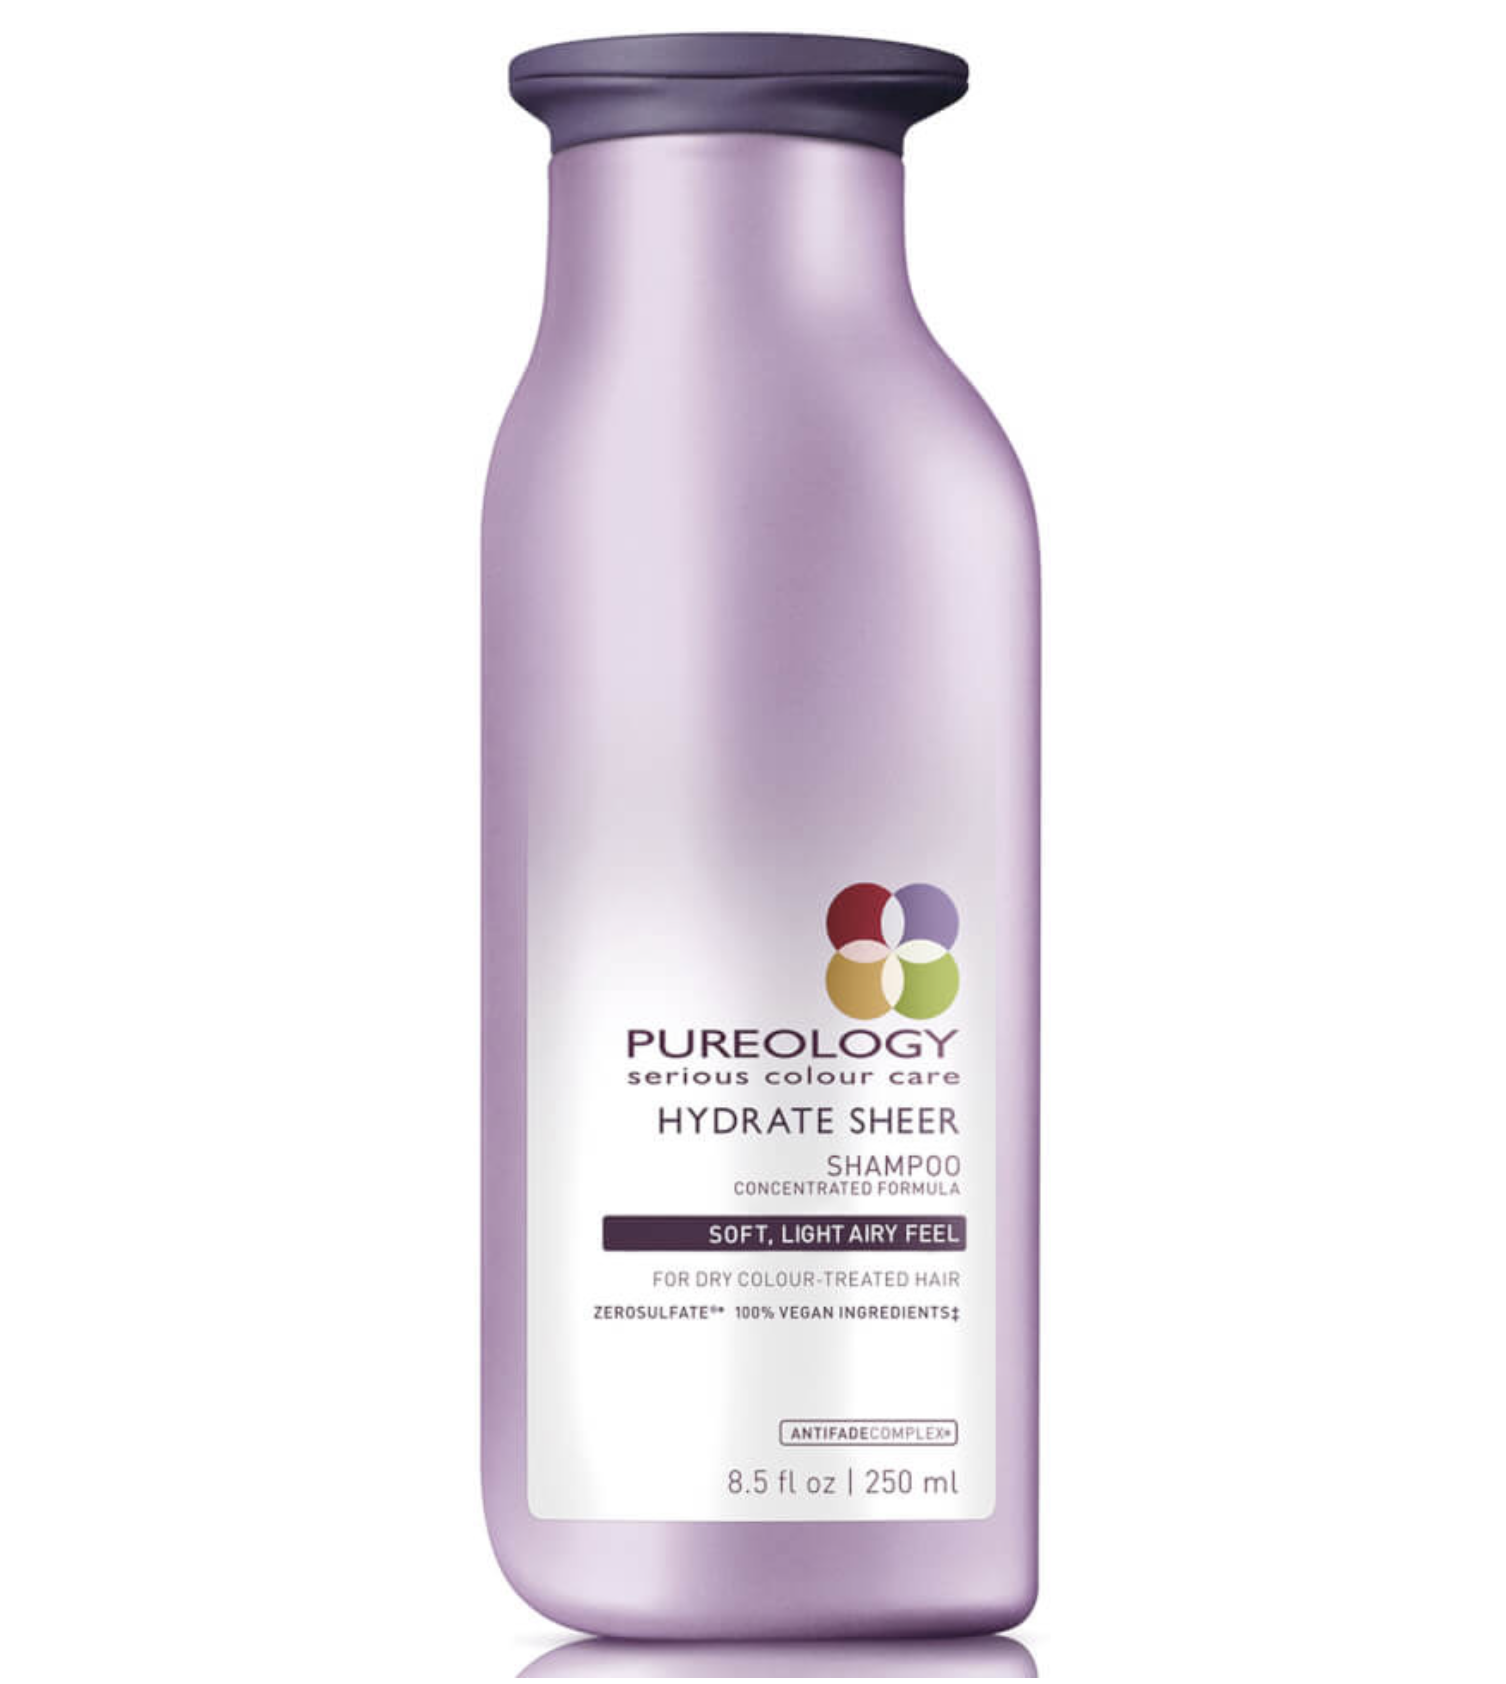 Pureology Hydrate Sheer Shampoo 250ml - Bespoke Hairdressing Rugby